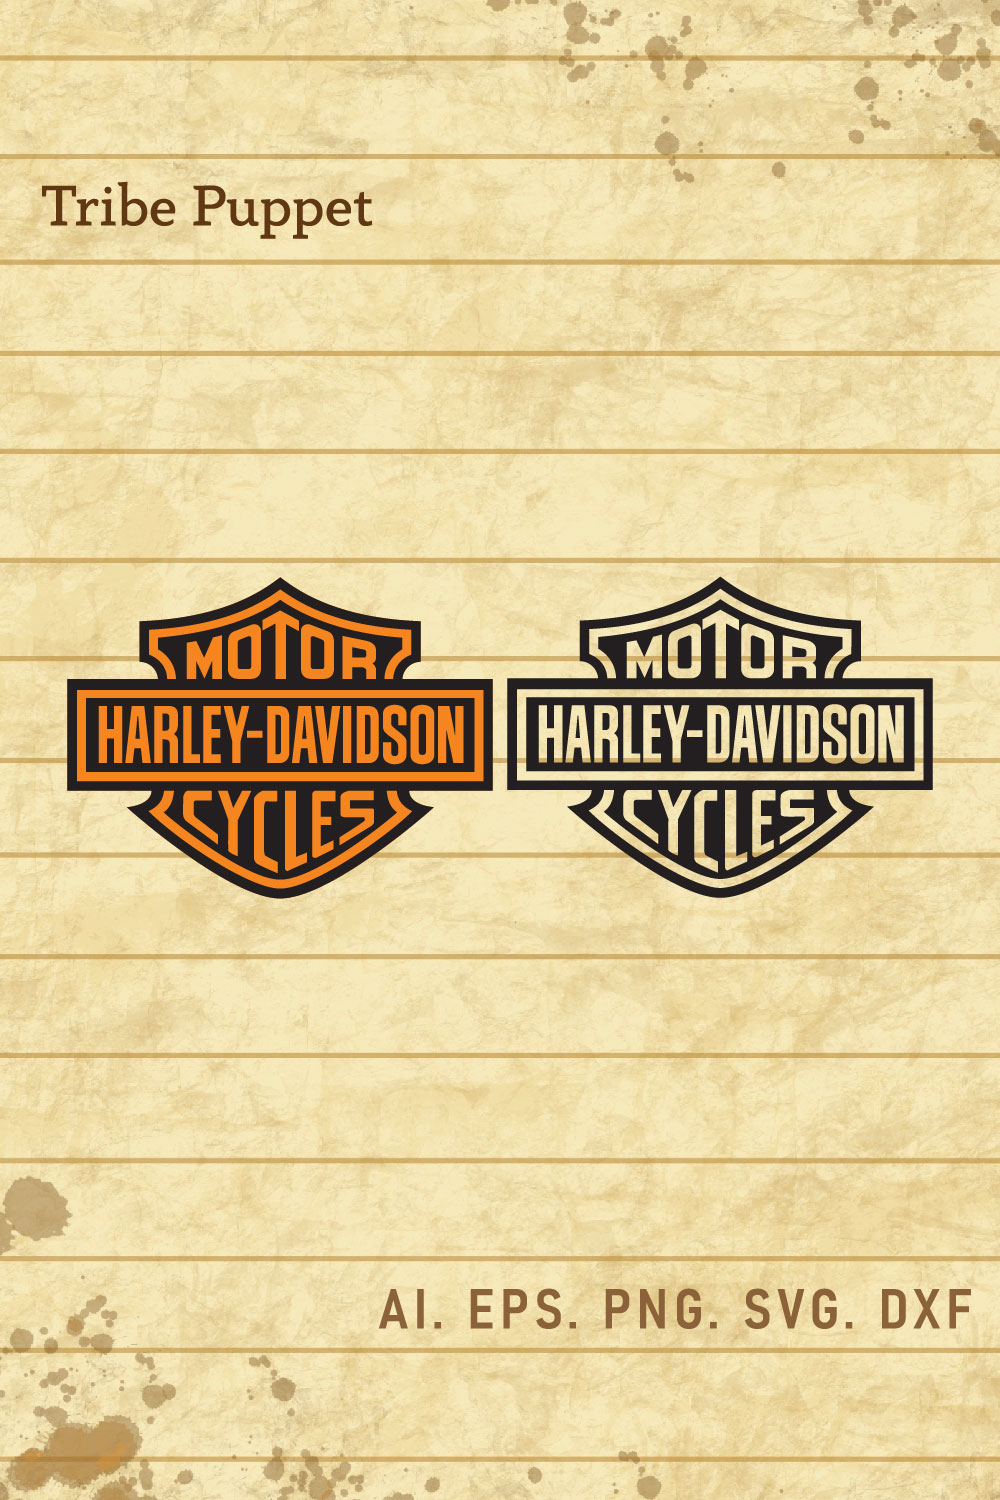 Harley Davidson Bike Logo pinterest preview image.